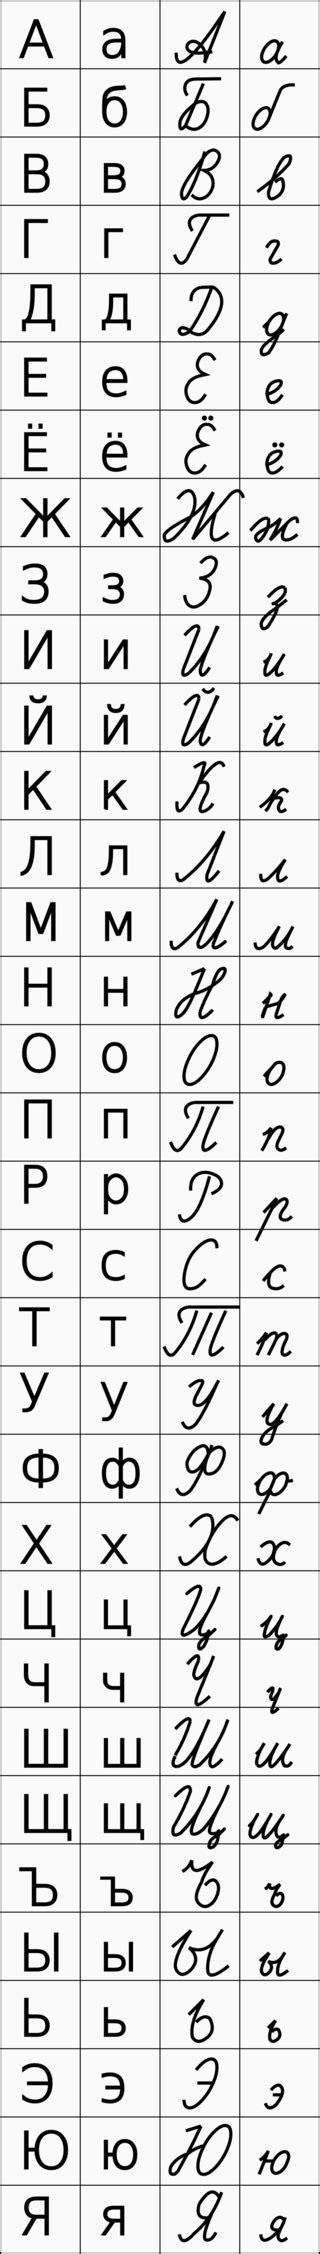 Russian Alphabet Printed And Cursive Russian Cursive Wikipedia